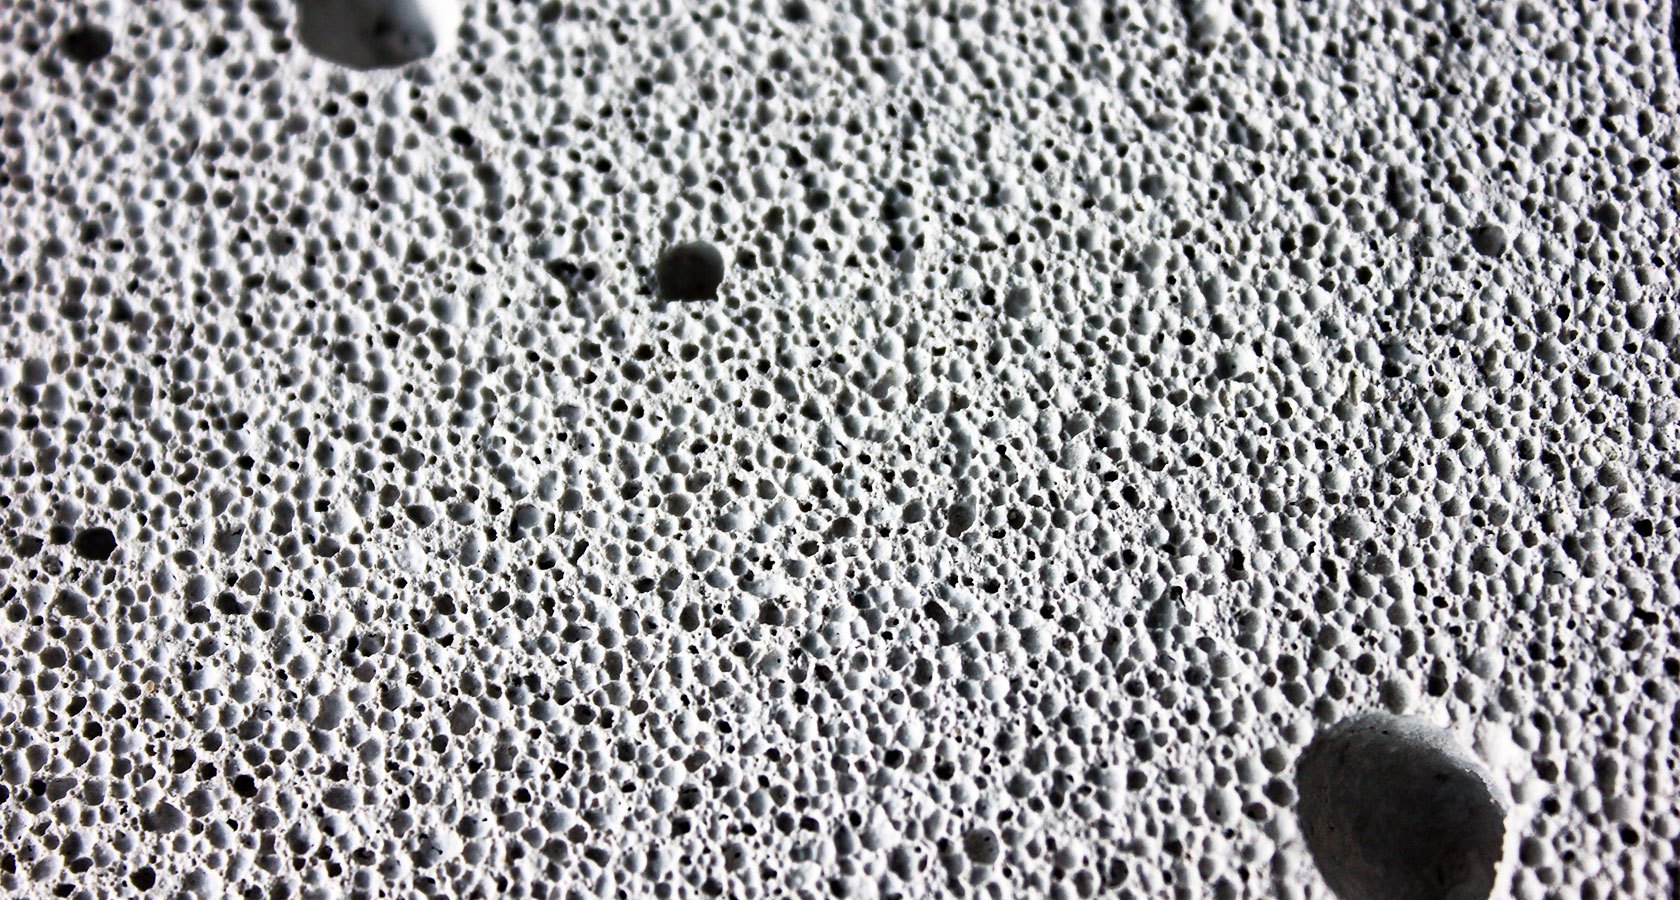 Concrete type. Ячеистый бетон, пористая керамика. Пористая структура газобетона. Ячеистый бетон структура. Ячеистый бетон текстура.